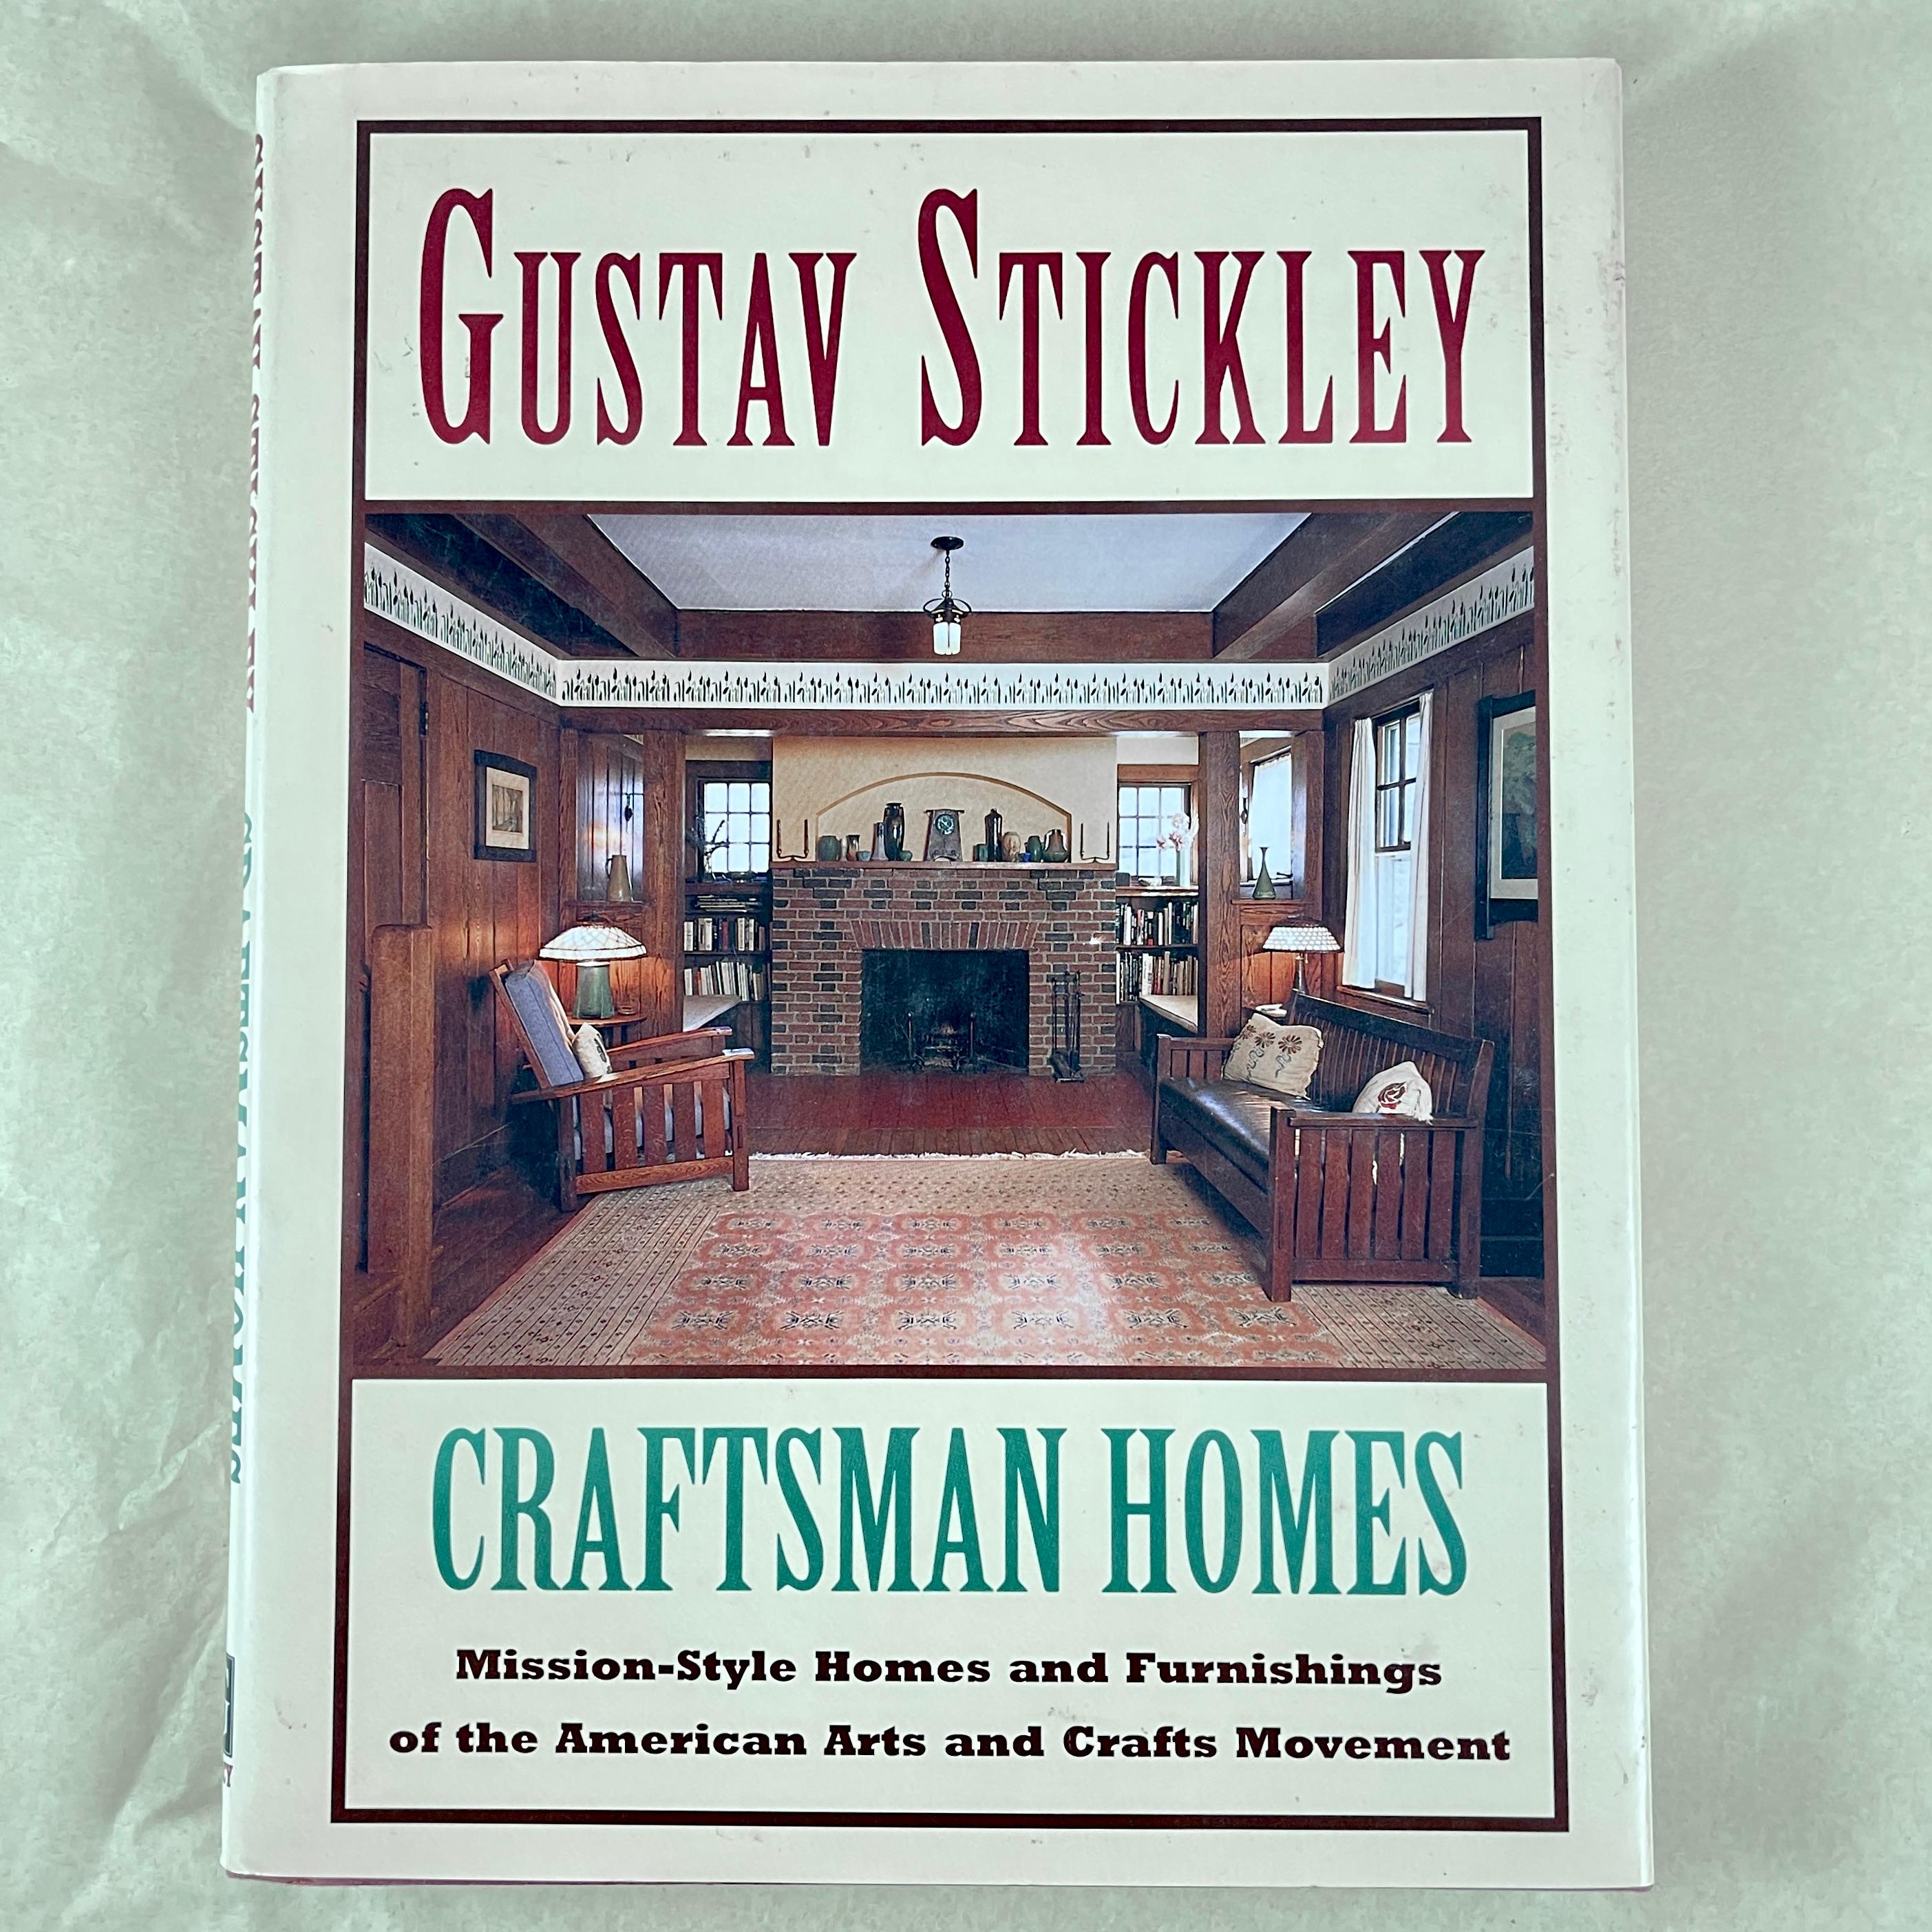 Gustav Stickley – Craftsman Homes, Gramercy, 1995.

Gustav Stickley (1858-1942) was an American furniture manufacturer, design leader, publisher, and a leading voice in the American Arts and Crafts movement.

Stickley’s design philosophy was a major